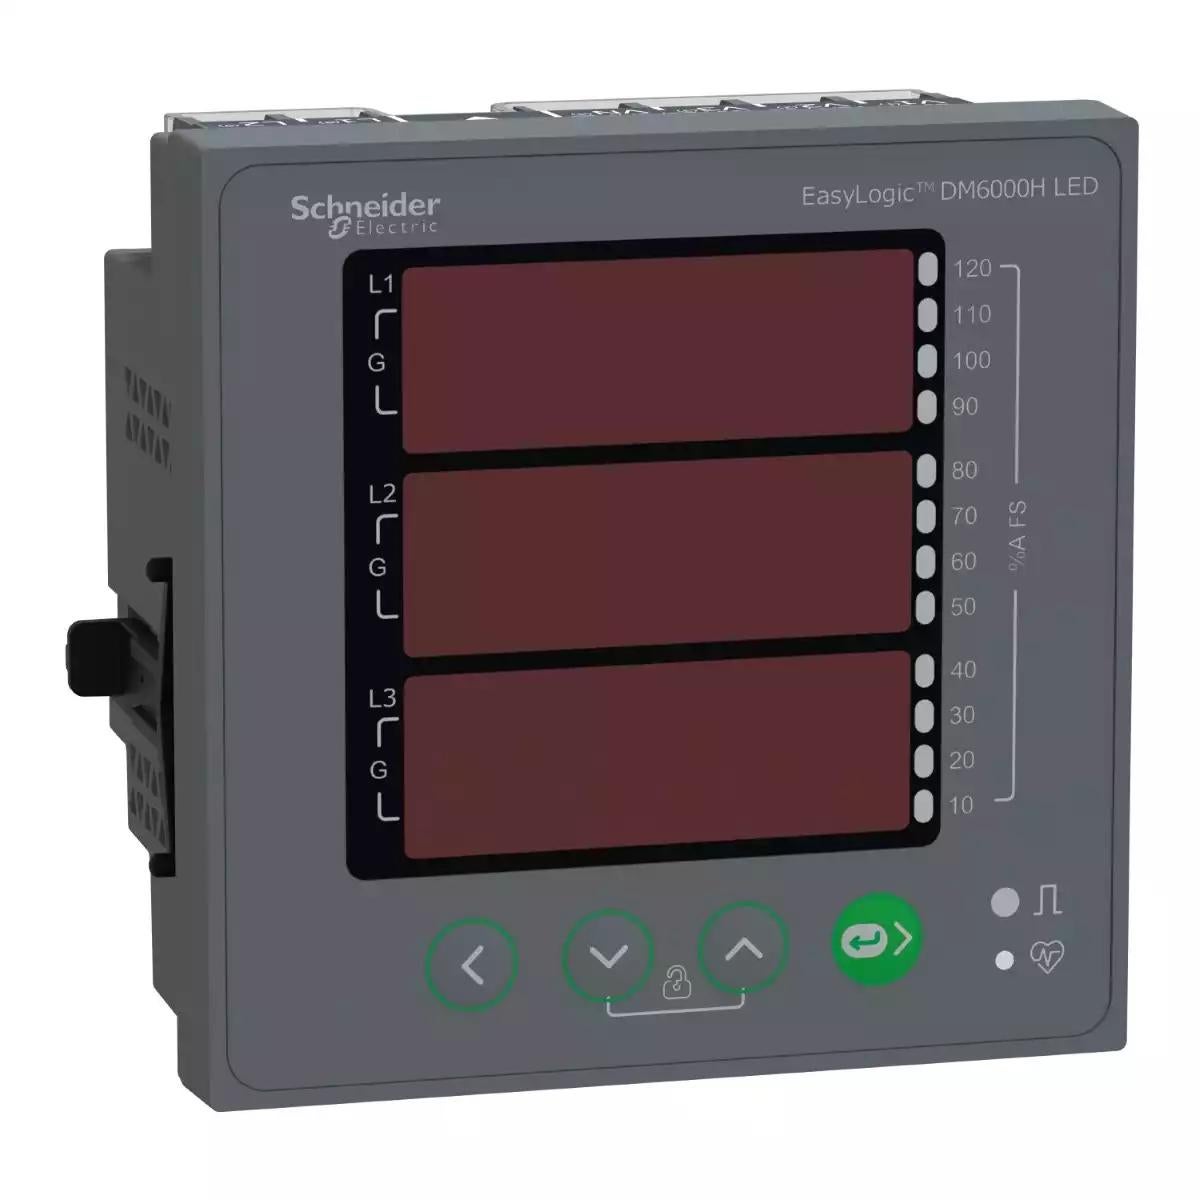 EASYLOGIC DM6200H digital panel meters